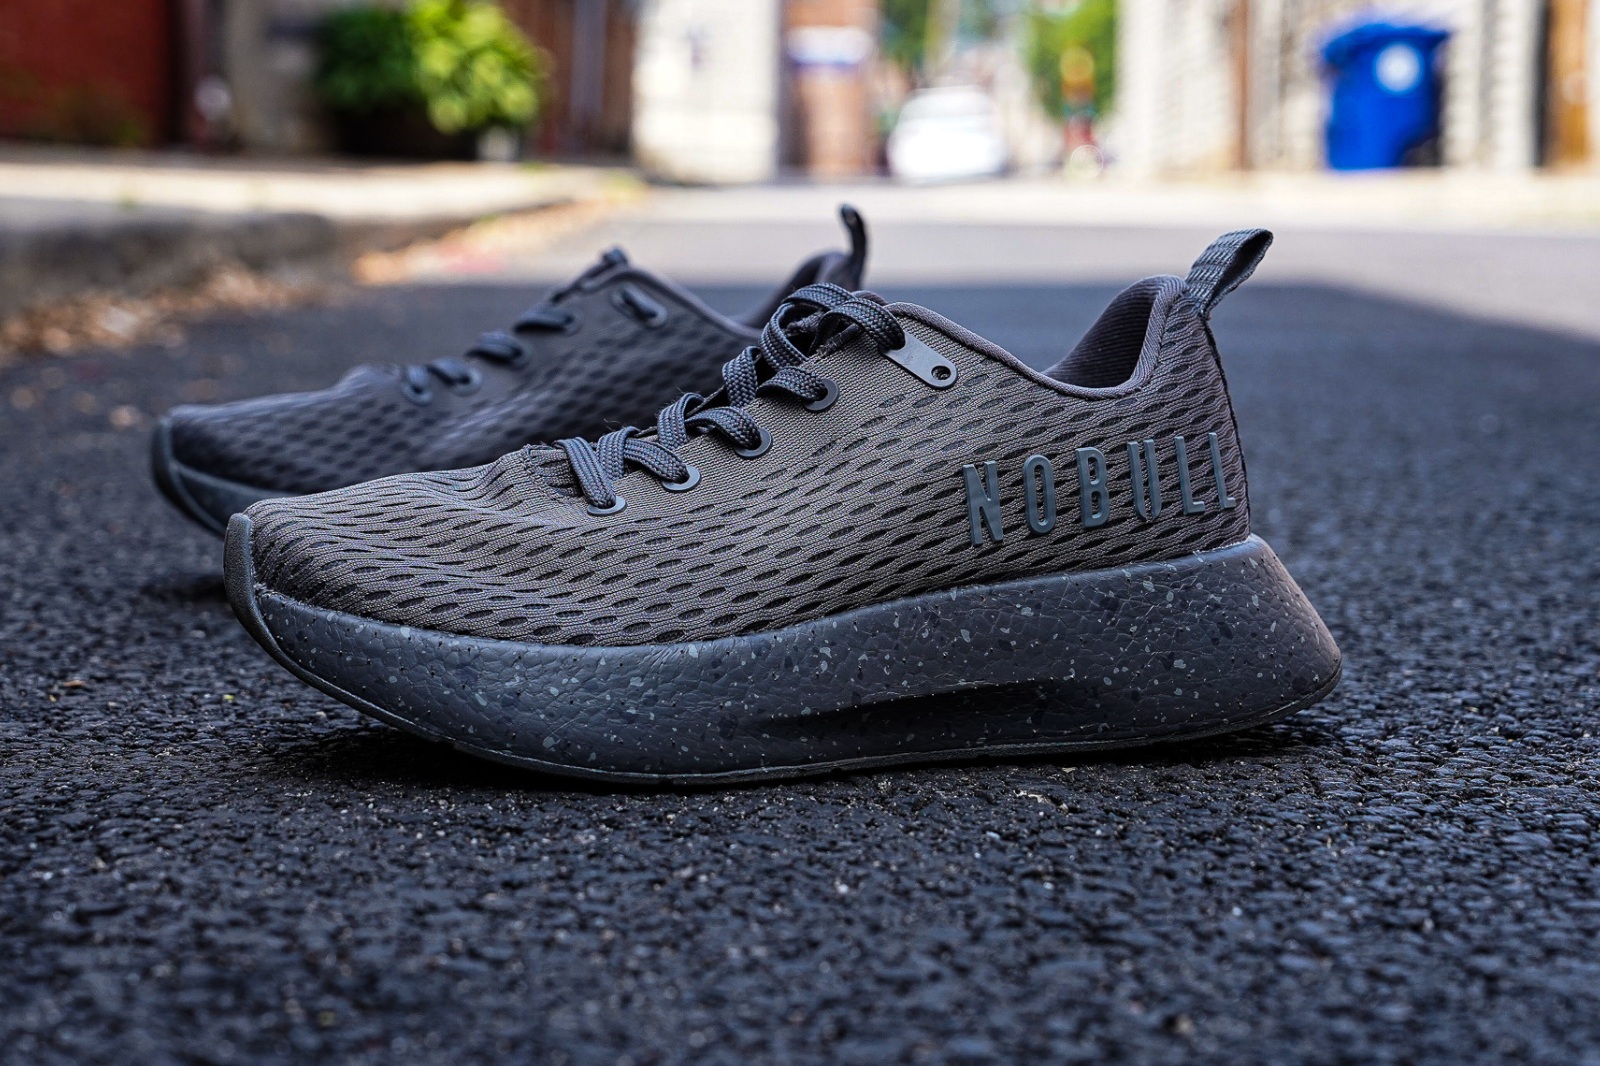 grey nobull runner+ side of the shoe in an alleyway